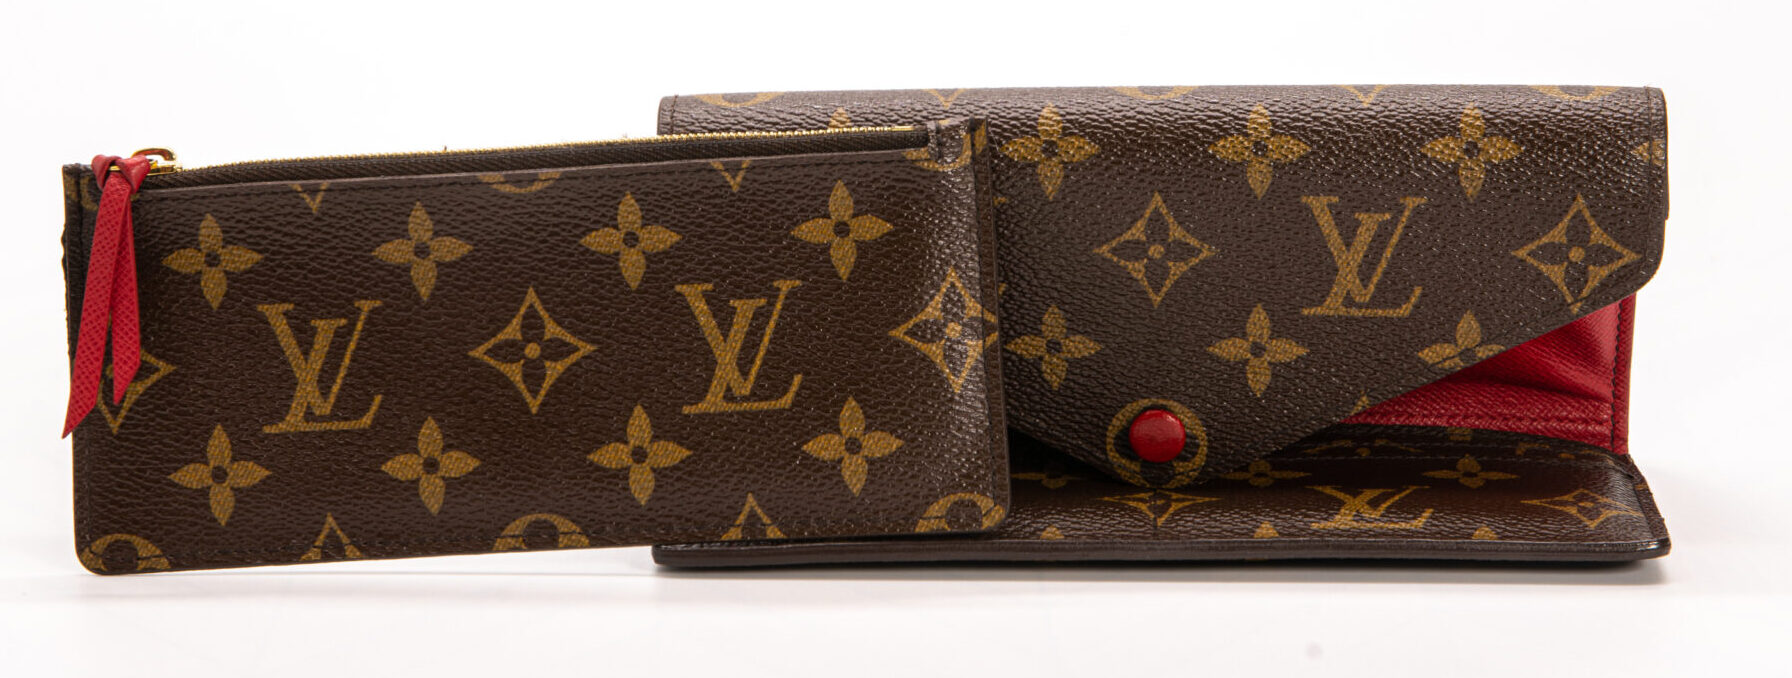 Louis Vuitton Wallet After Treatment.